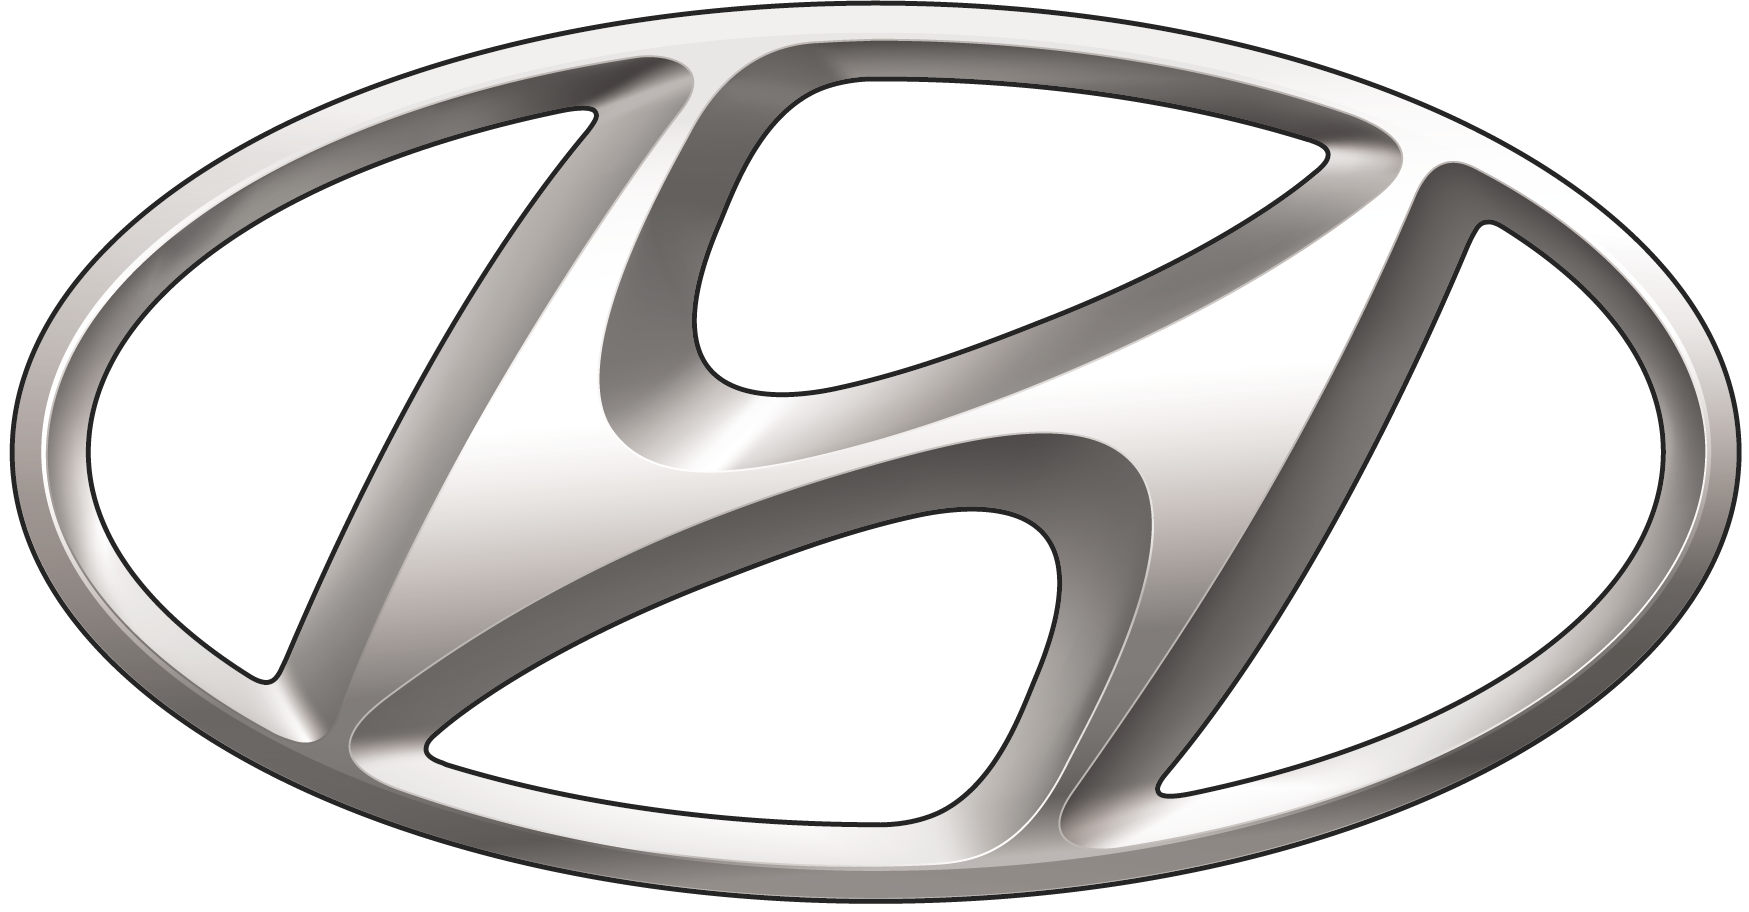 Hyundai Car Logo Png Brand Image - Hyundai, Transparent background PNG HD thumbnail